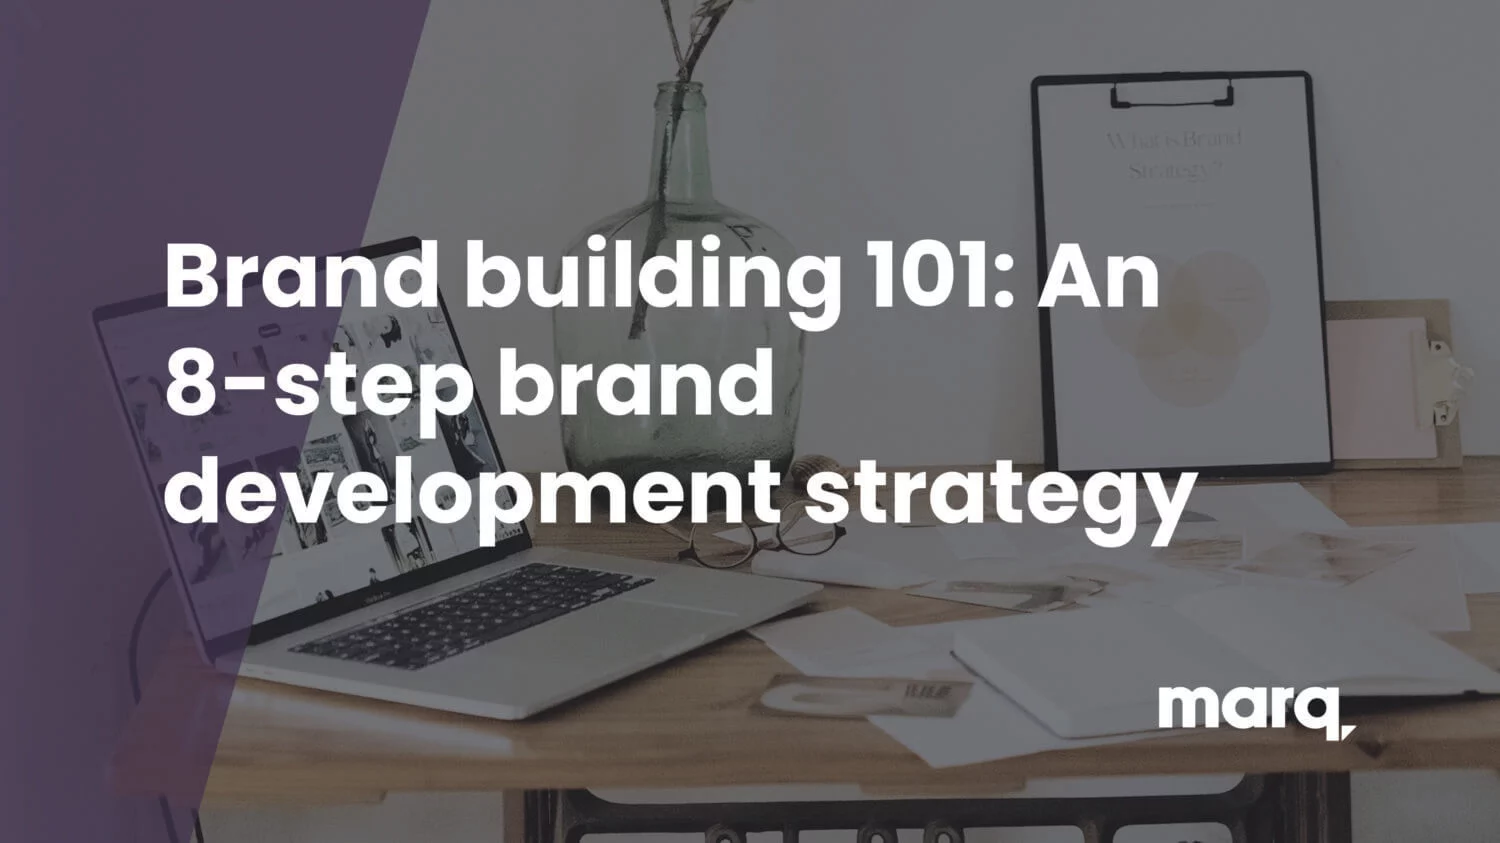 An 8-step brand development strategy